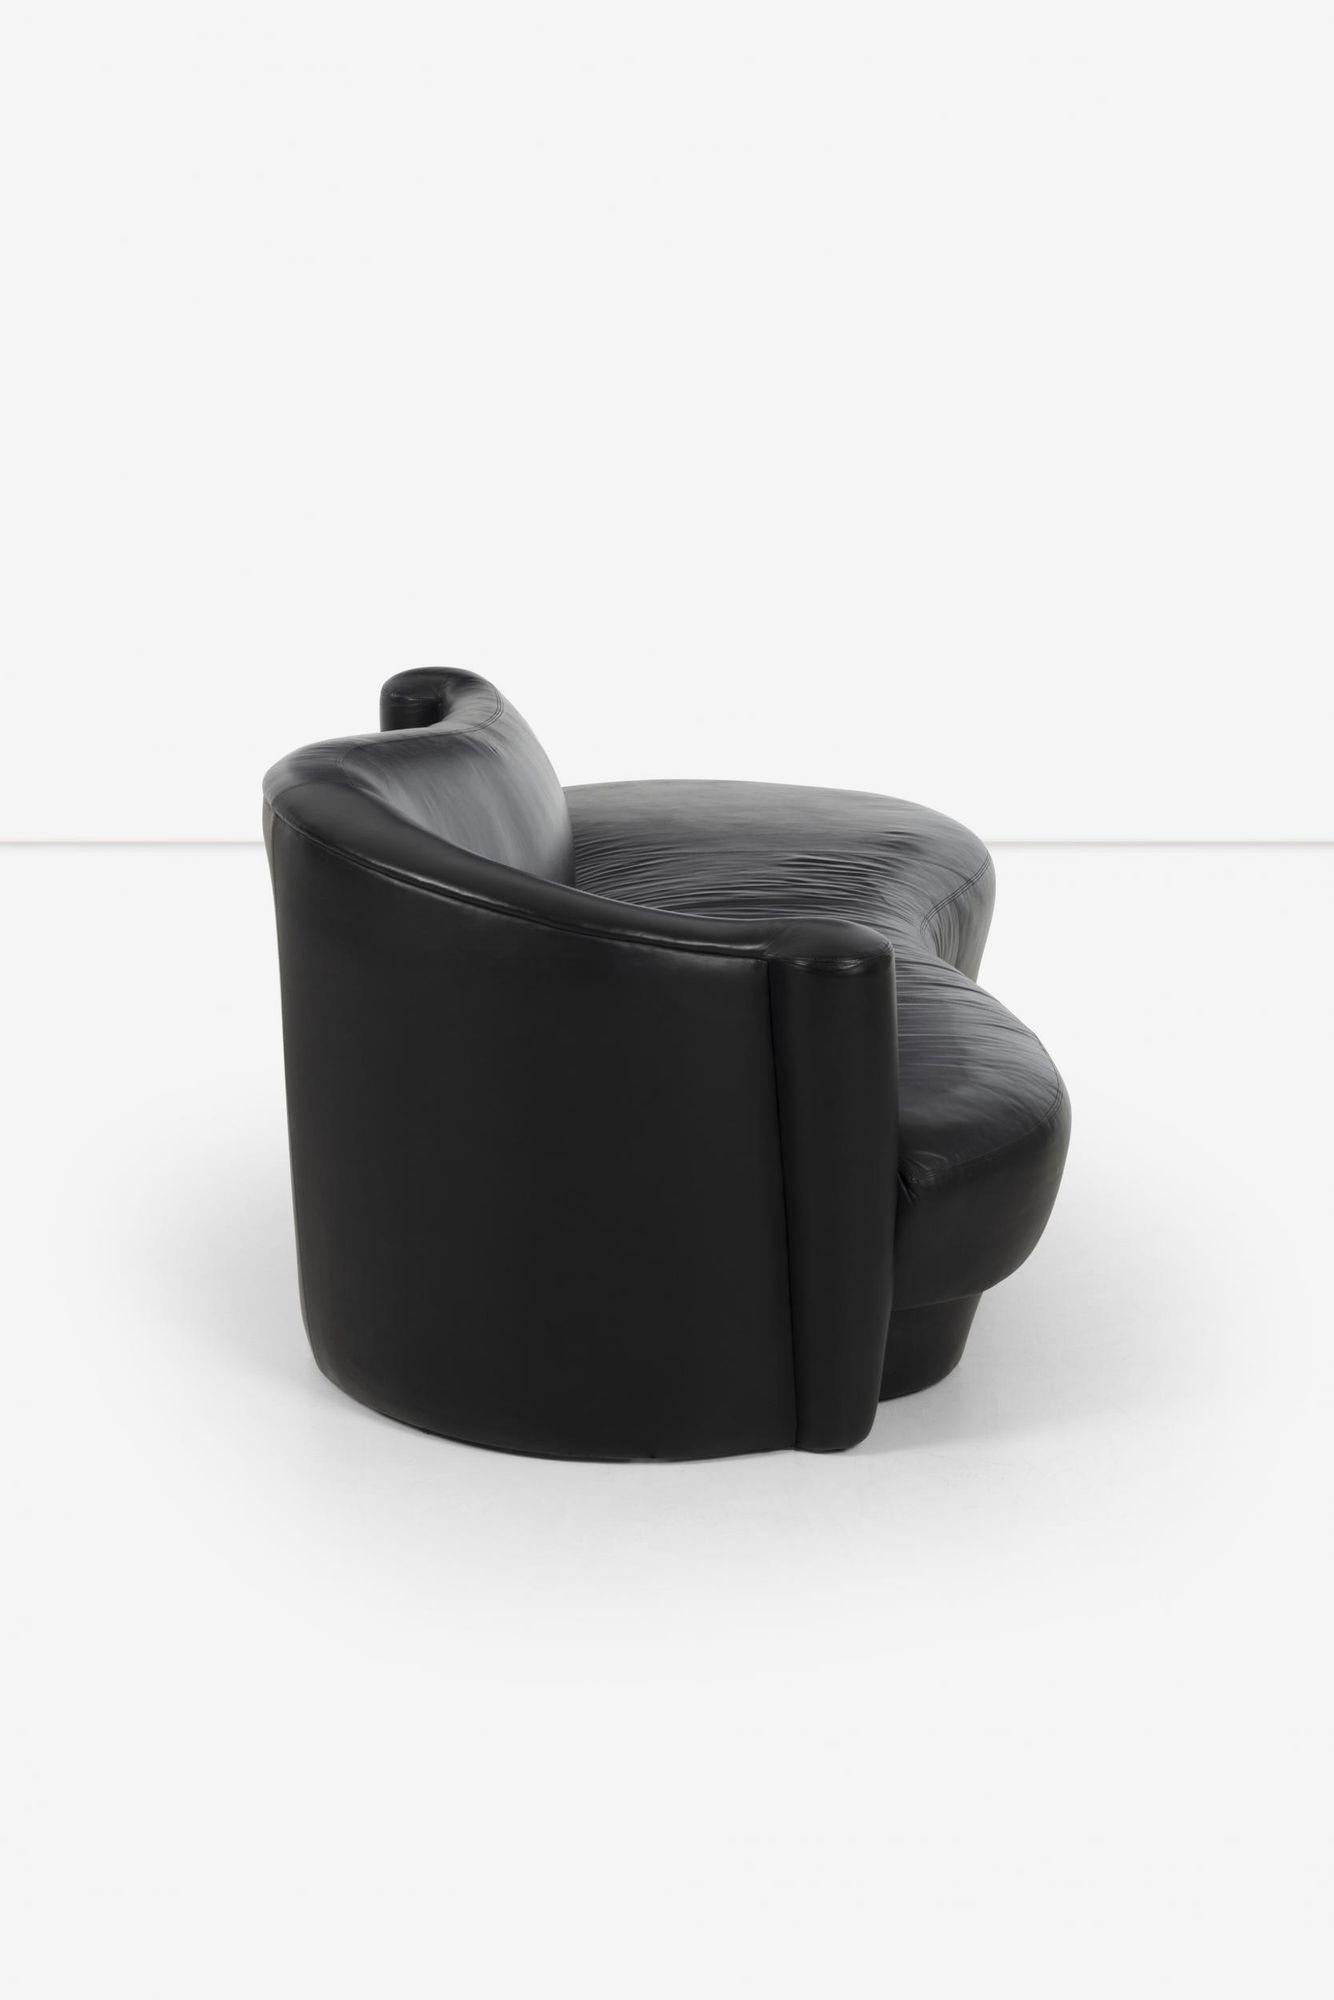 Appliqué Weiman Black Leather Sofa For Sale